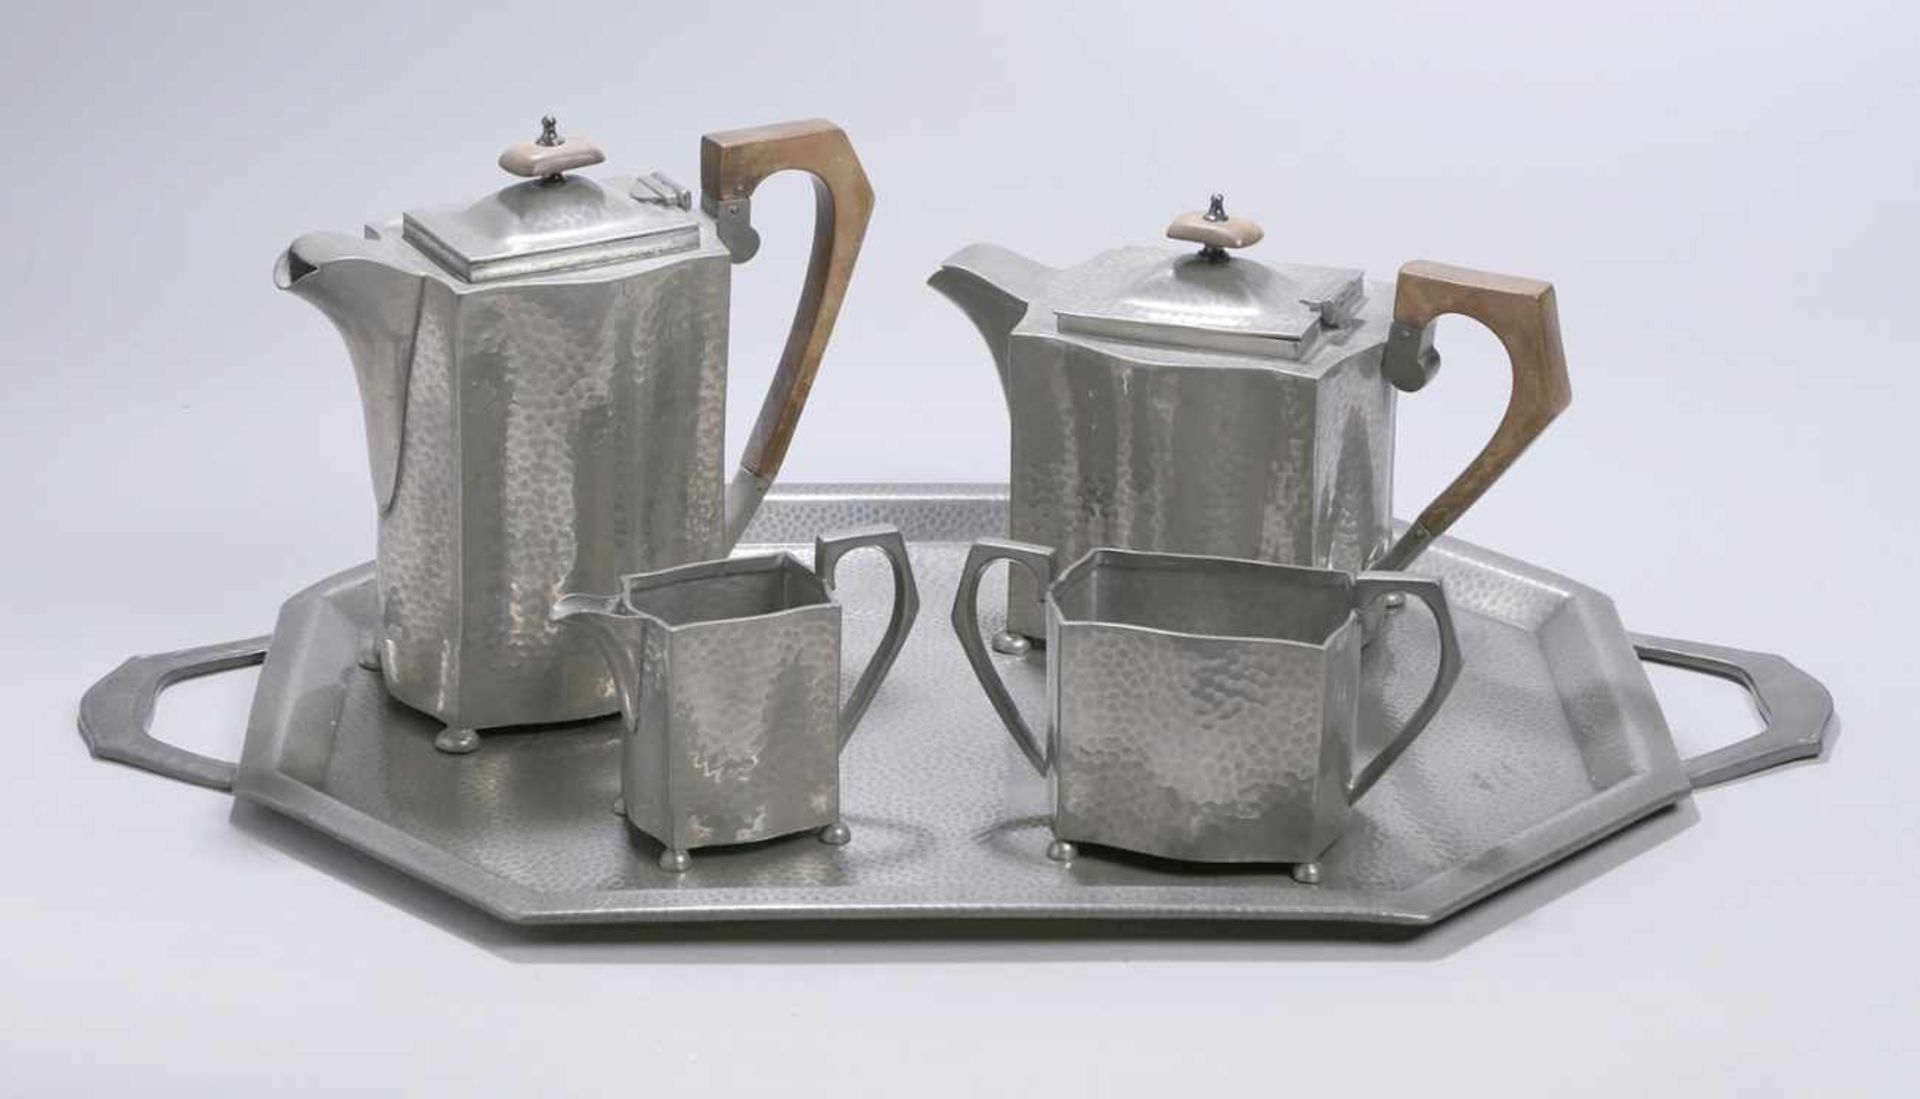 Zinn-Kaffee-/Teesevice, 5-tlg., Hutton, Sheffielf, um 1910-20, bestehend aus: Tablett, 2Kannen,